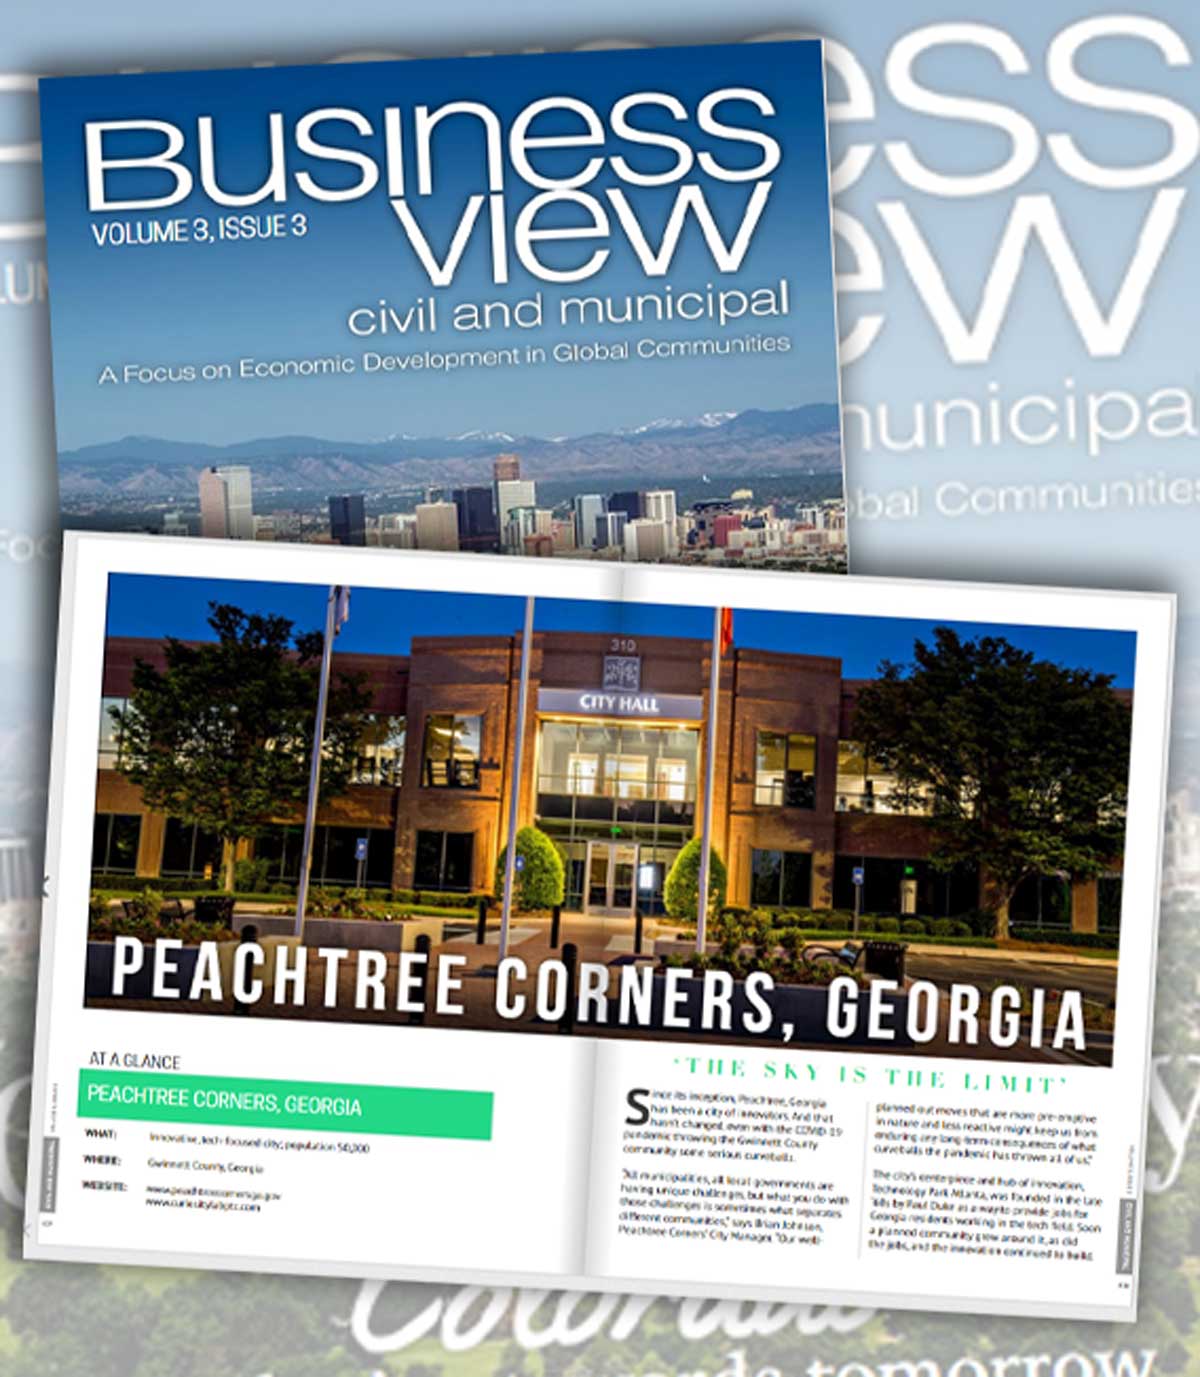 Business View Magazine